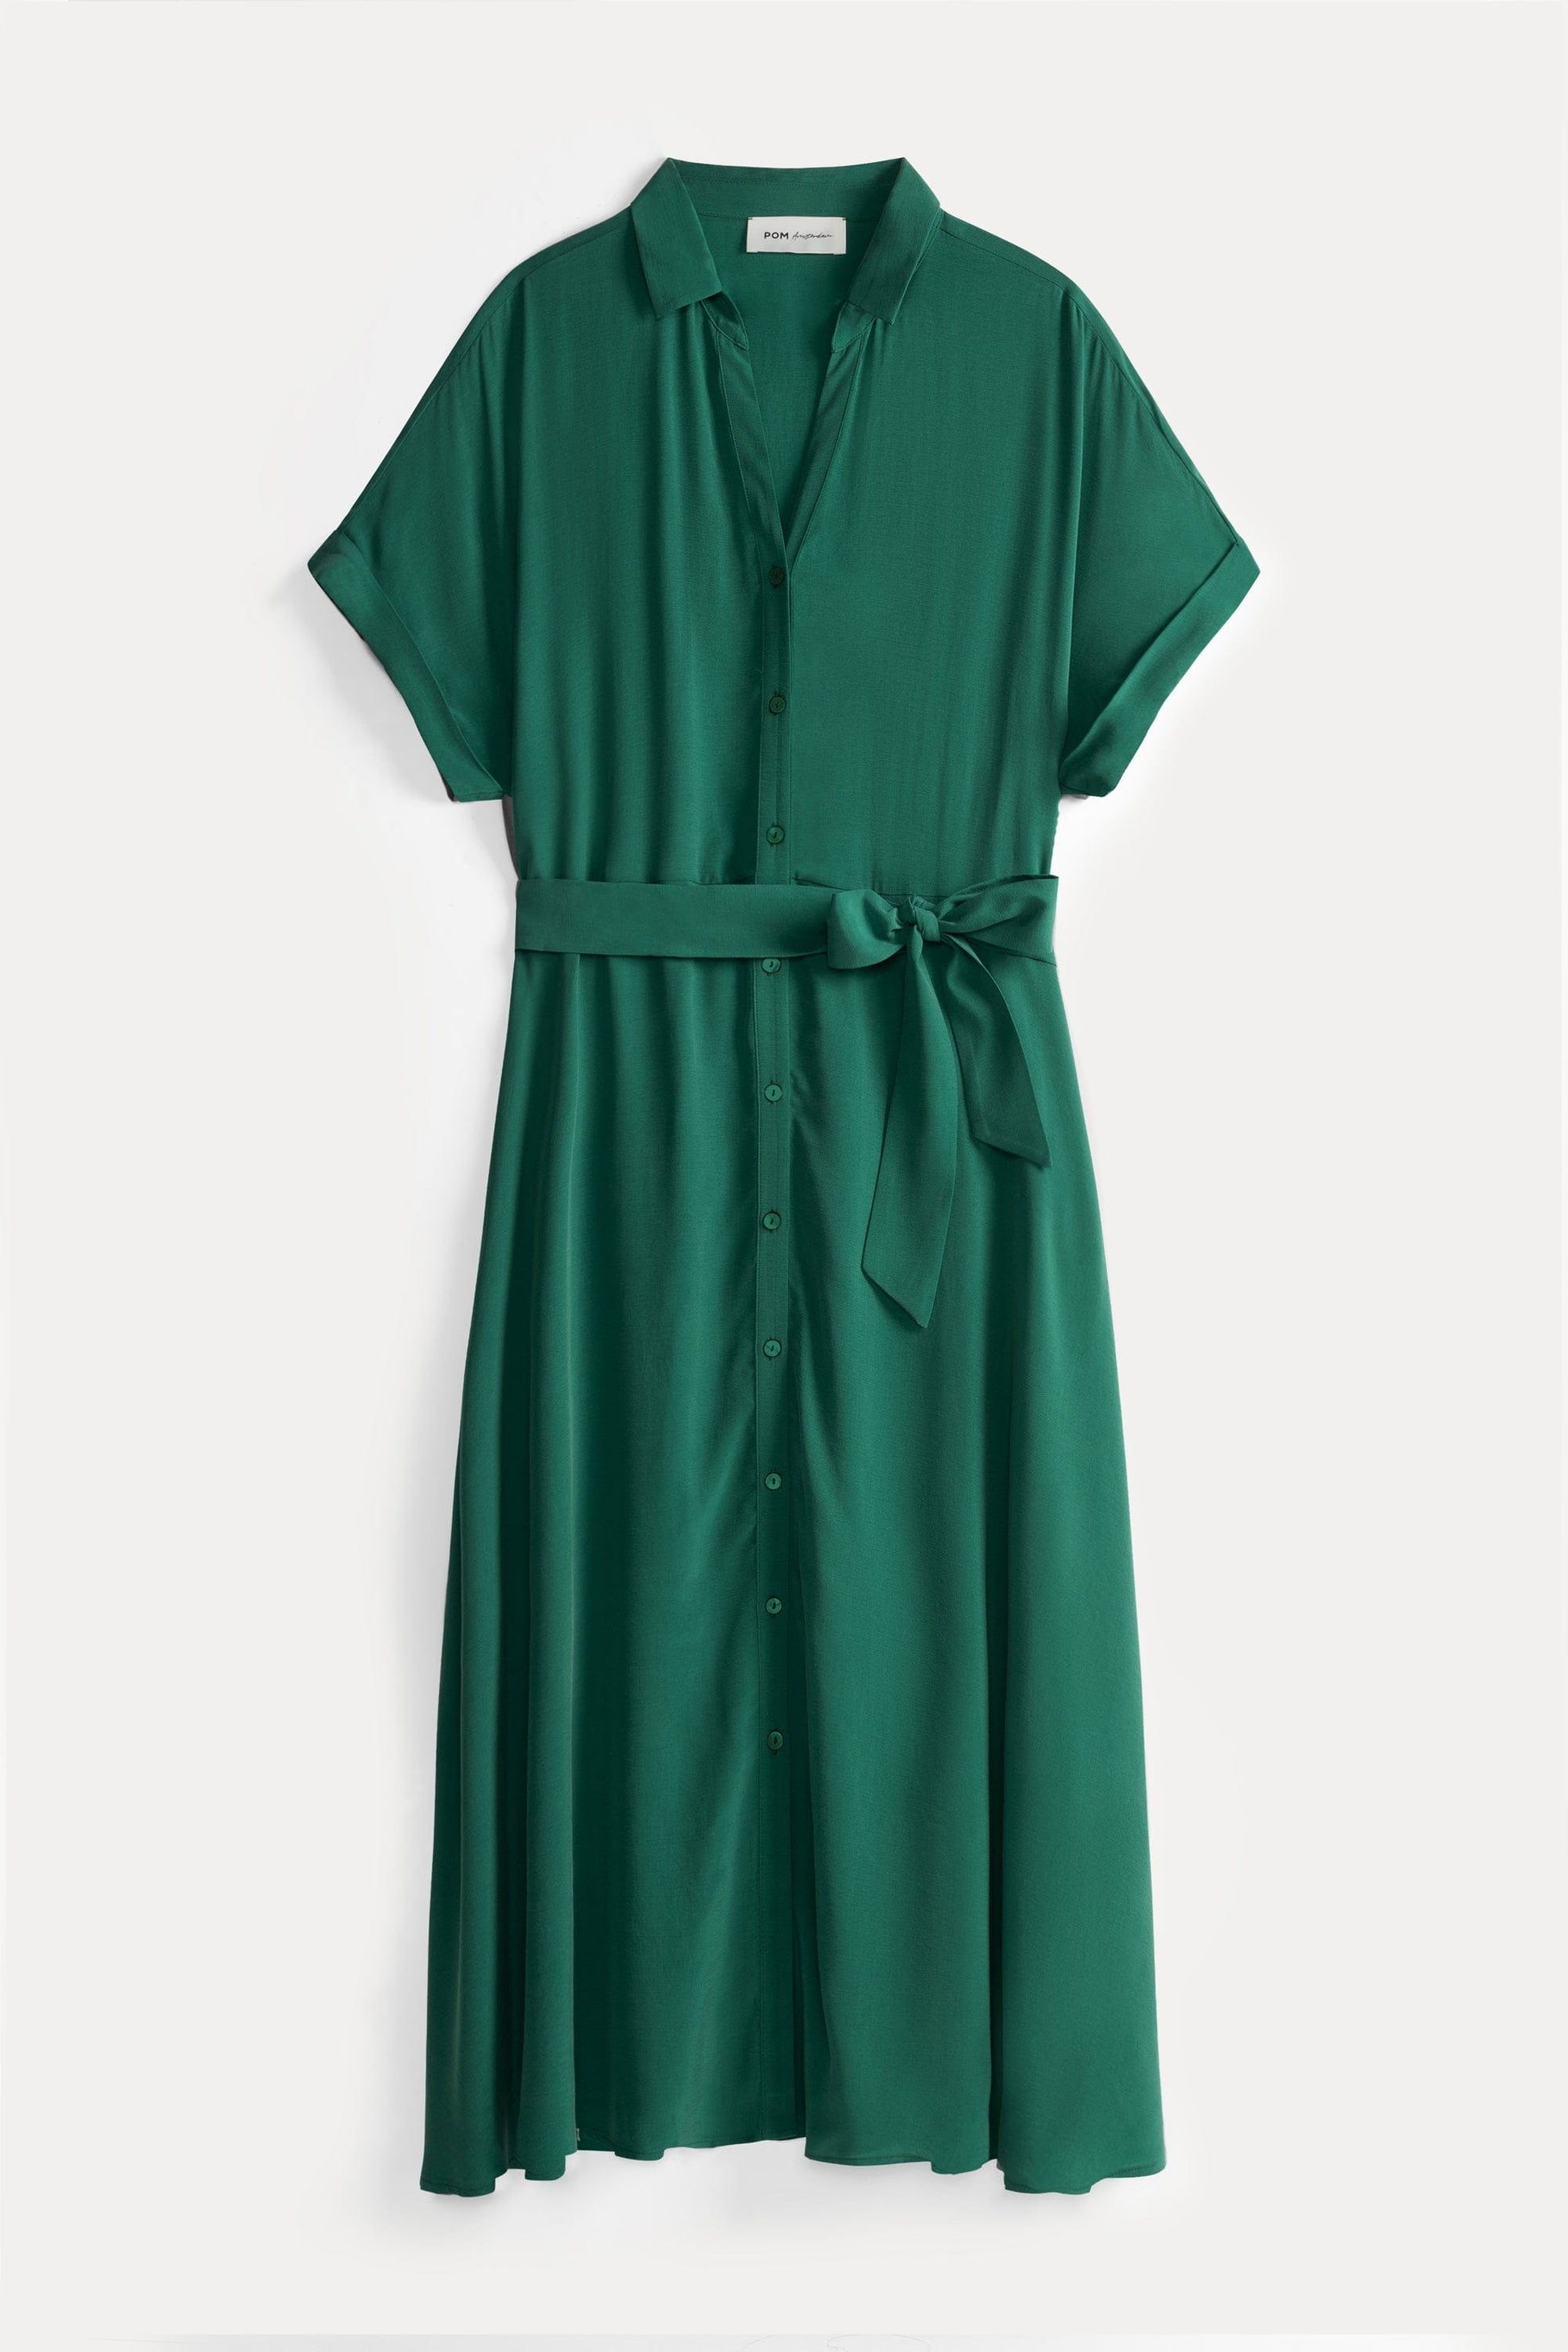 POM Amsterdam Dresses DRESS - Lynn Pacific Green